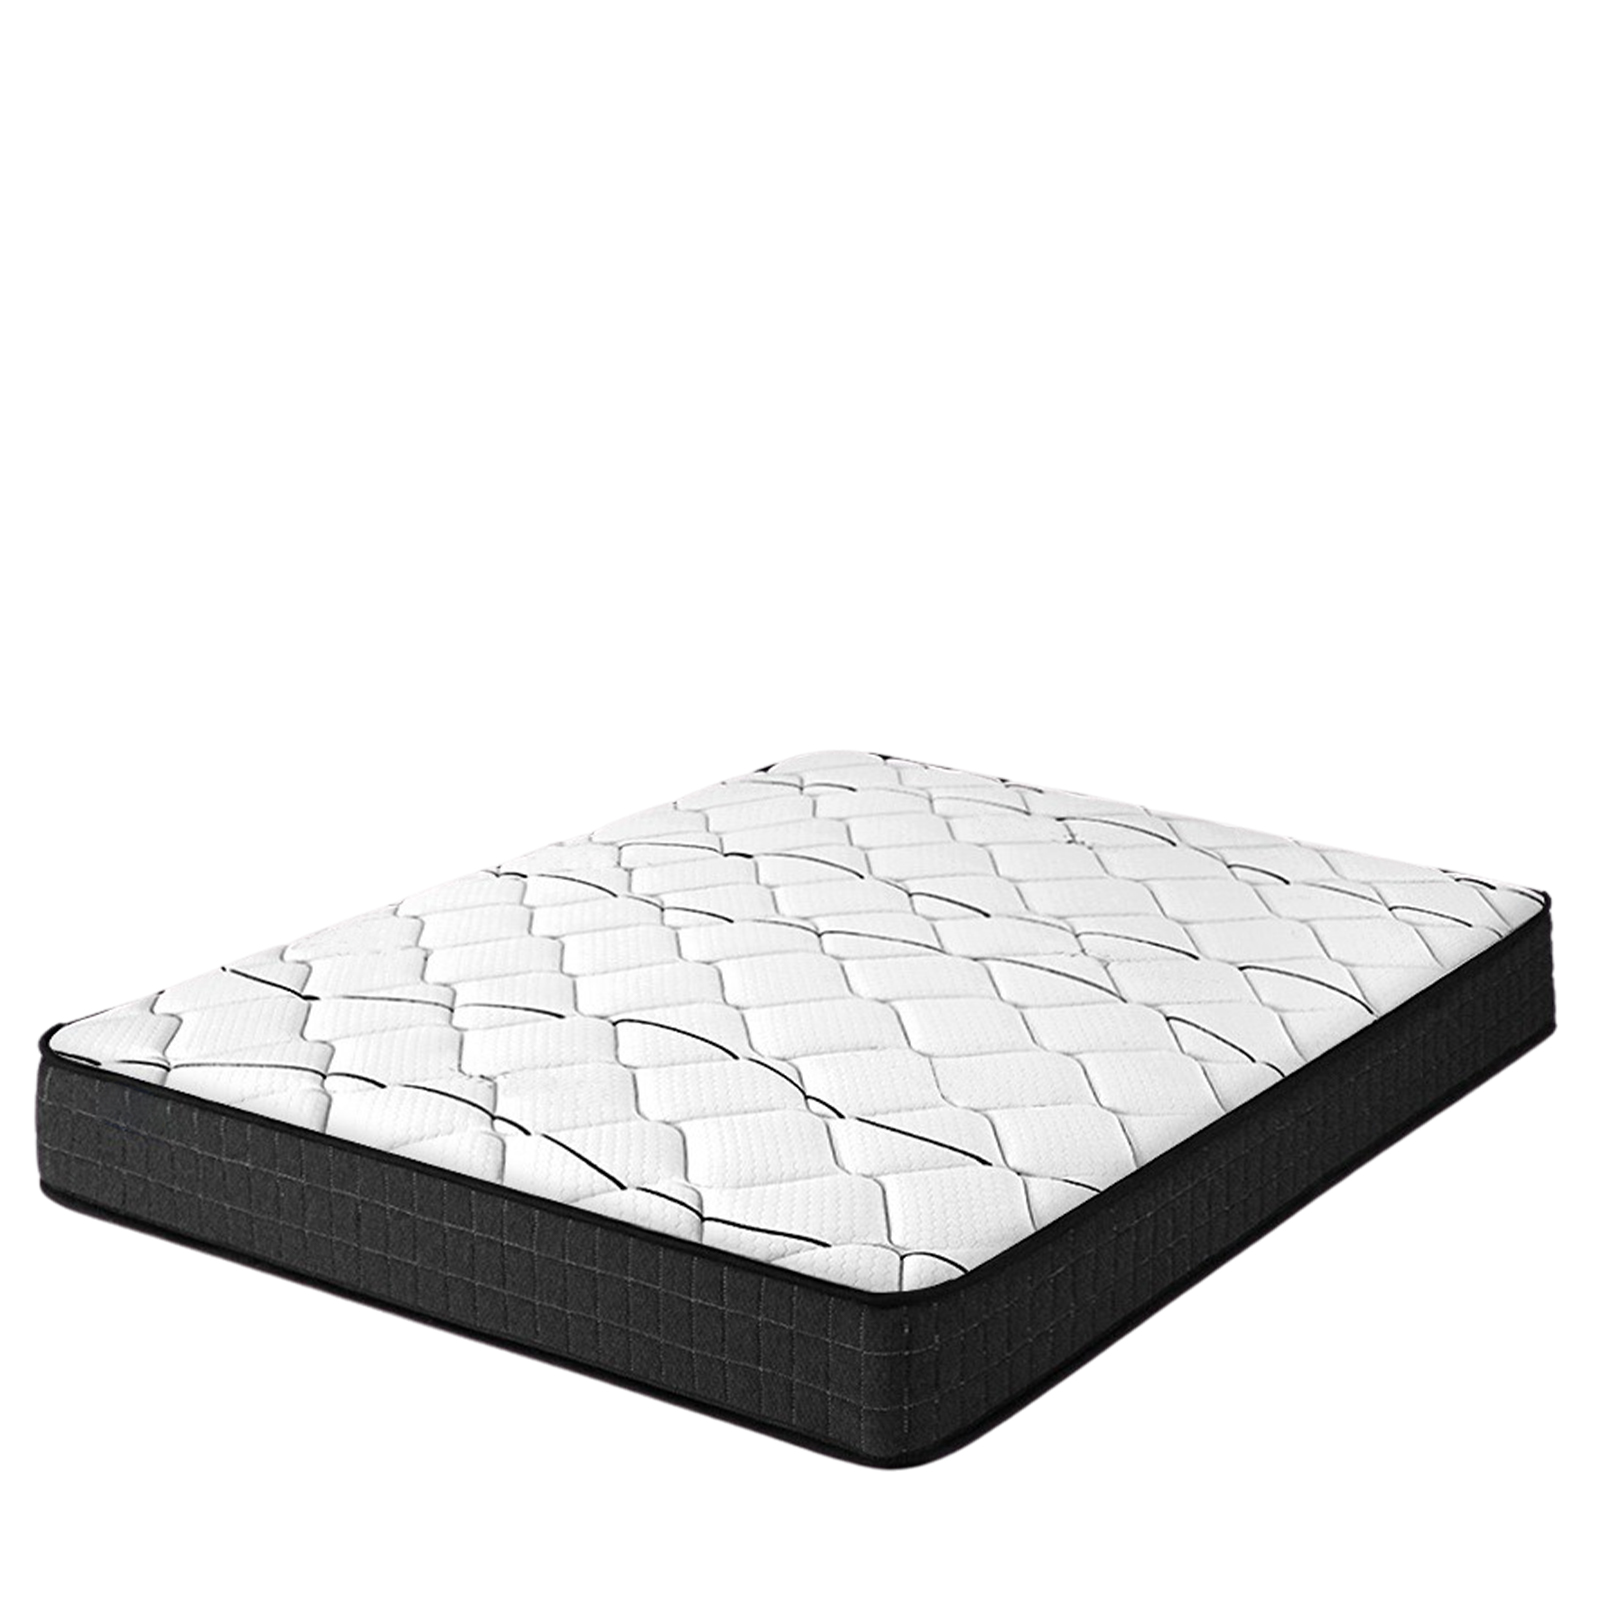 Single Size Mattress Bed Medium Firm Foam Bonnell Spring High Density Foam 16cm